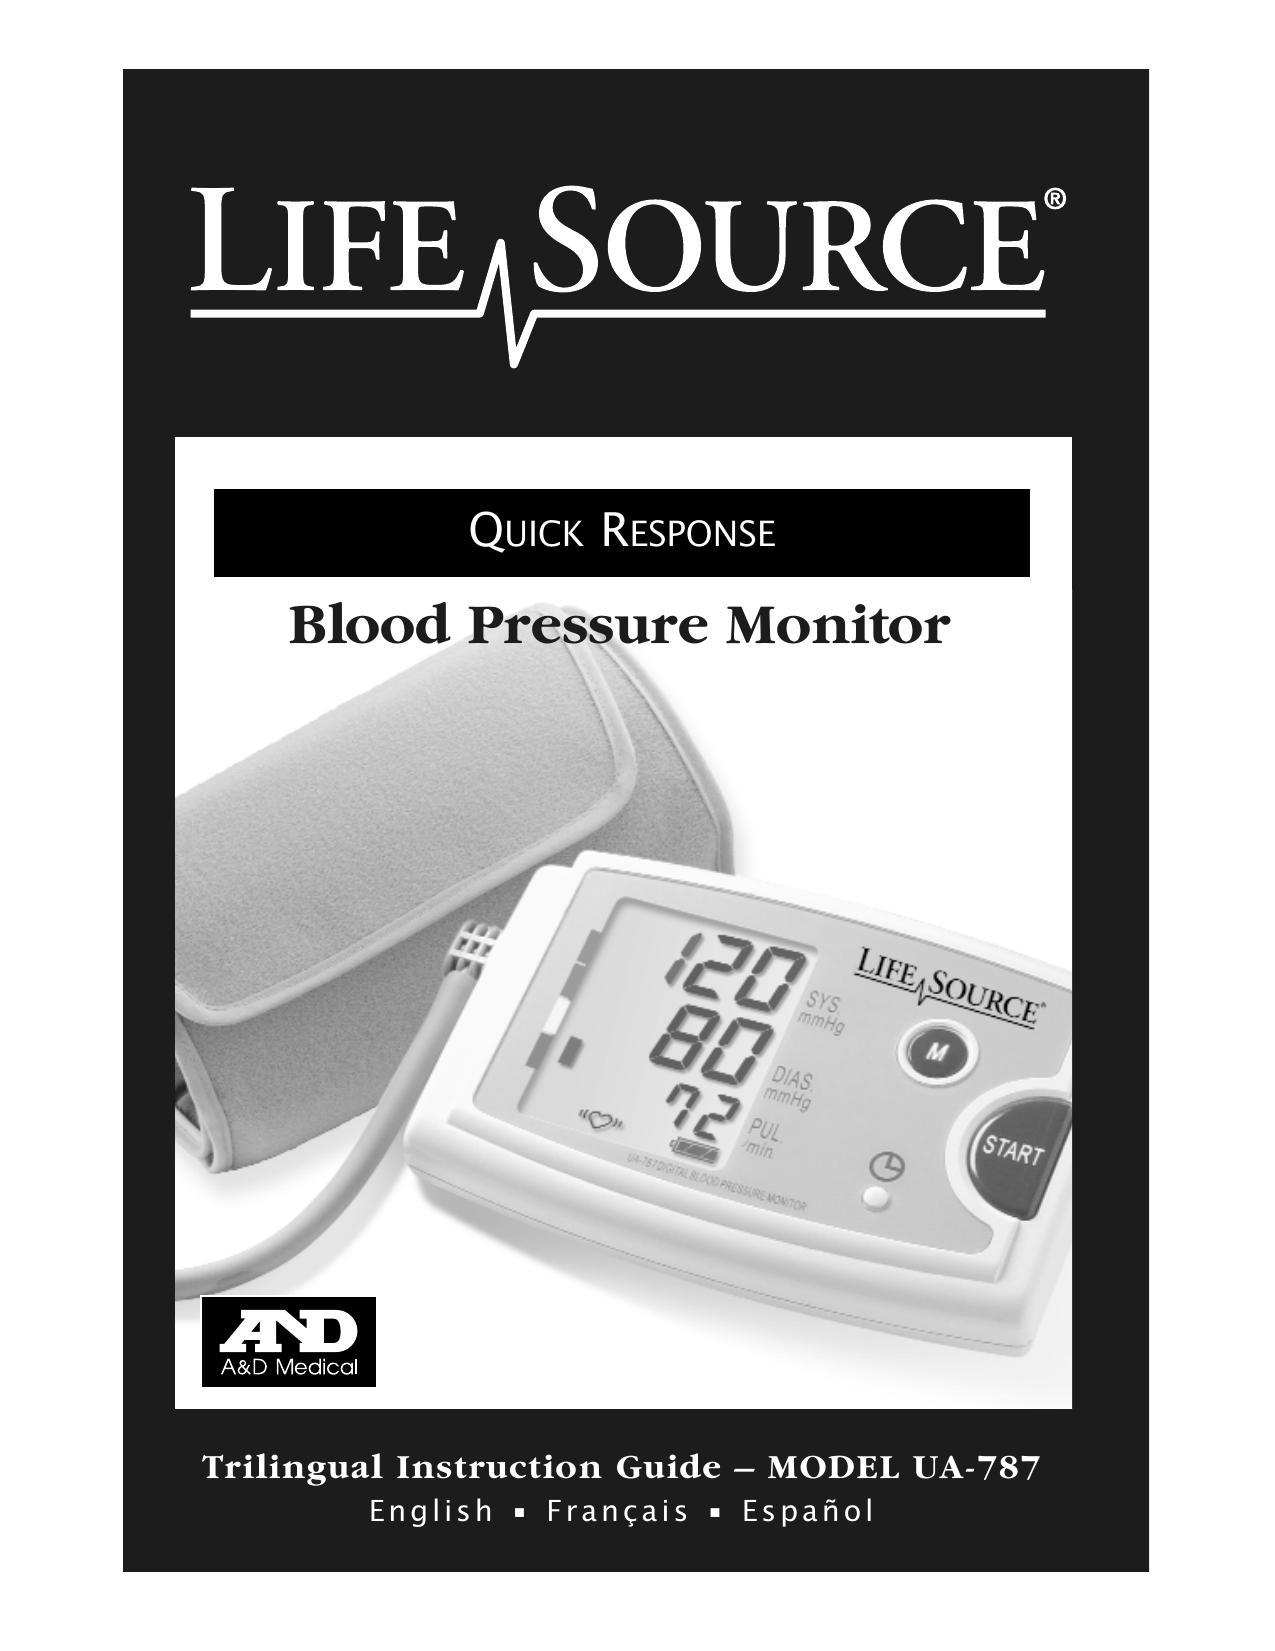 lifesource-quick-response-blood-pressure-monitor-model-ua-787-trilingual-instruction-guide.pdf